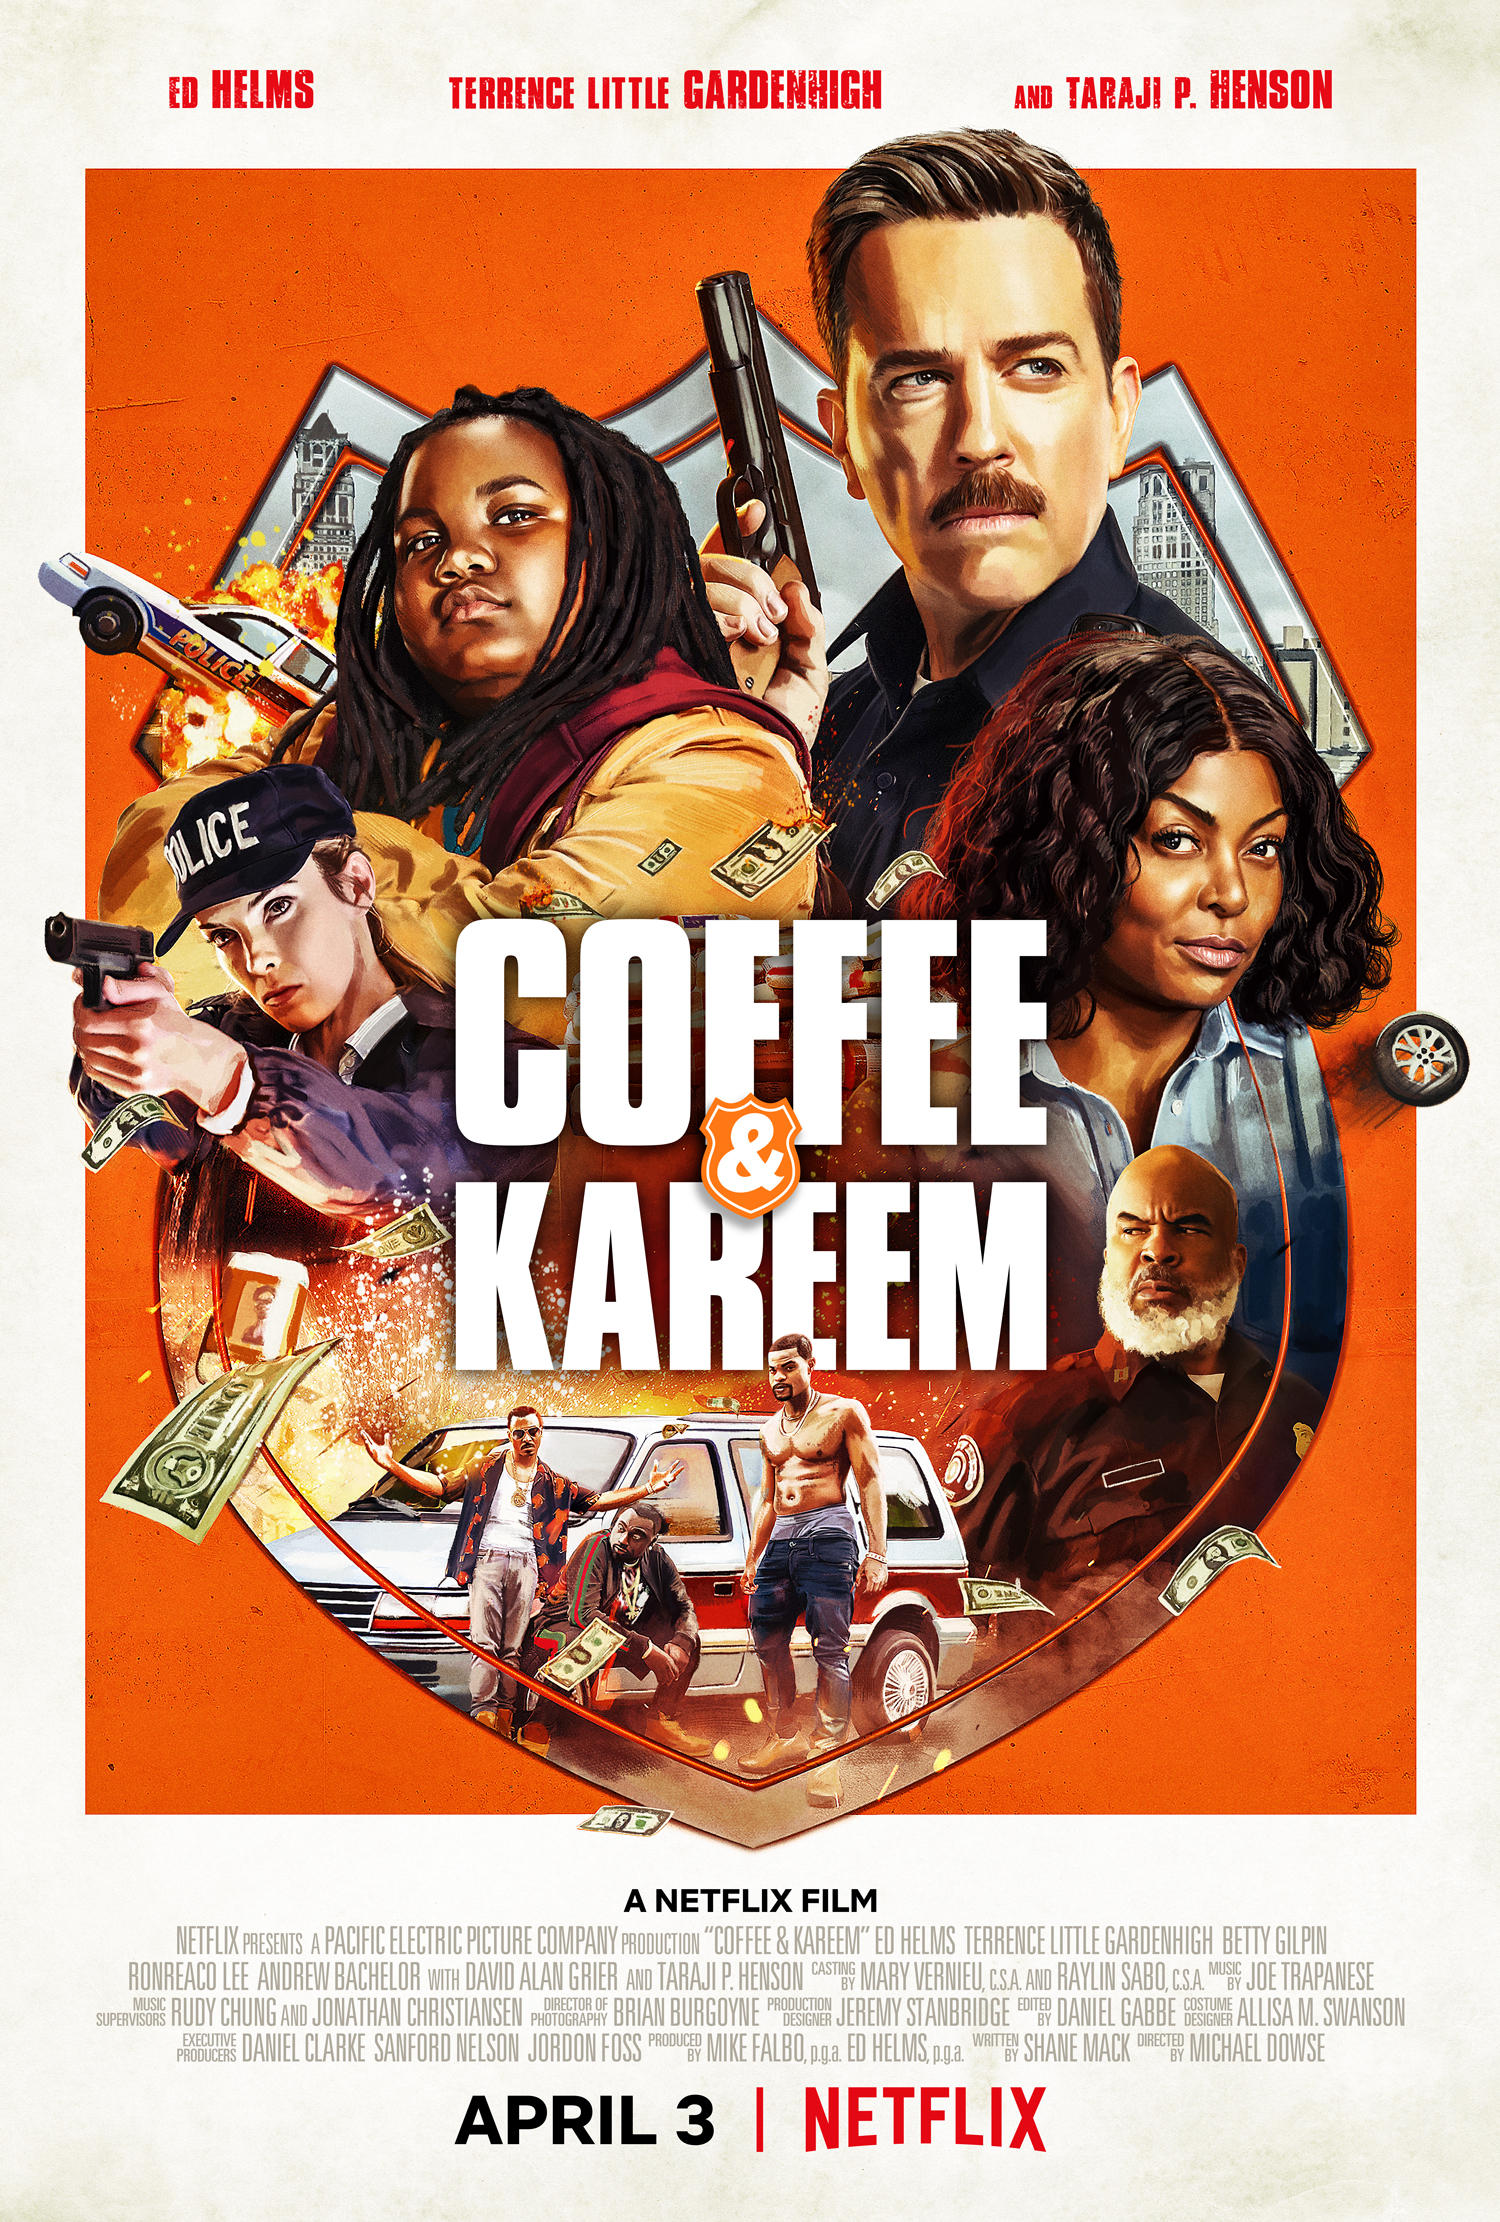 New Movie: Netflix Coffee & Kareem Starring Ed Helms, Taraji P. Henson, Terrence Little Gardenhigh